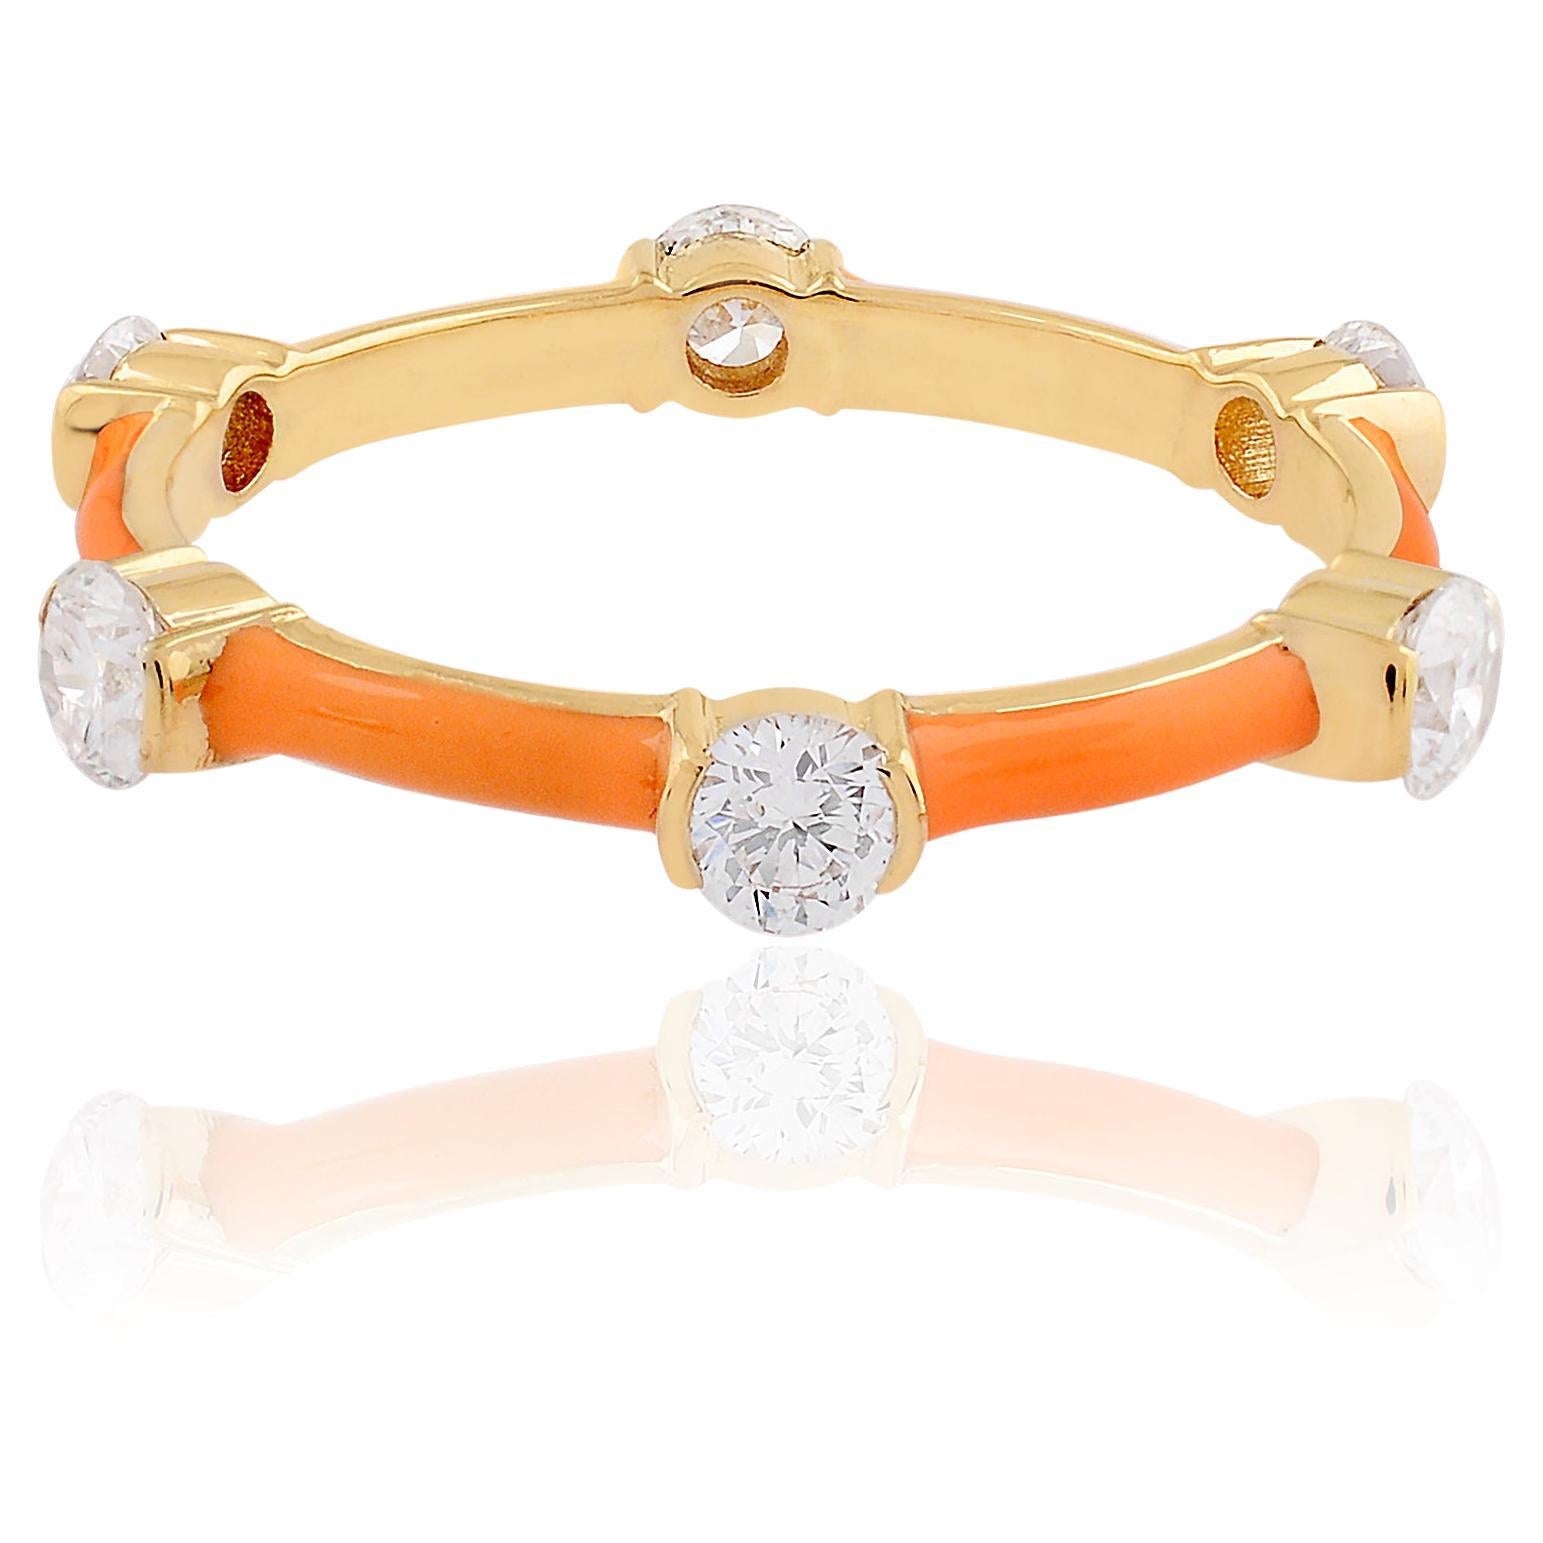 For Sale:  0.76 Carat Diamond Orange Enamel Band Ring Solid 18k Yellow Gold Fine Jewelry